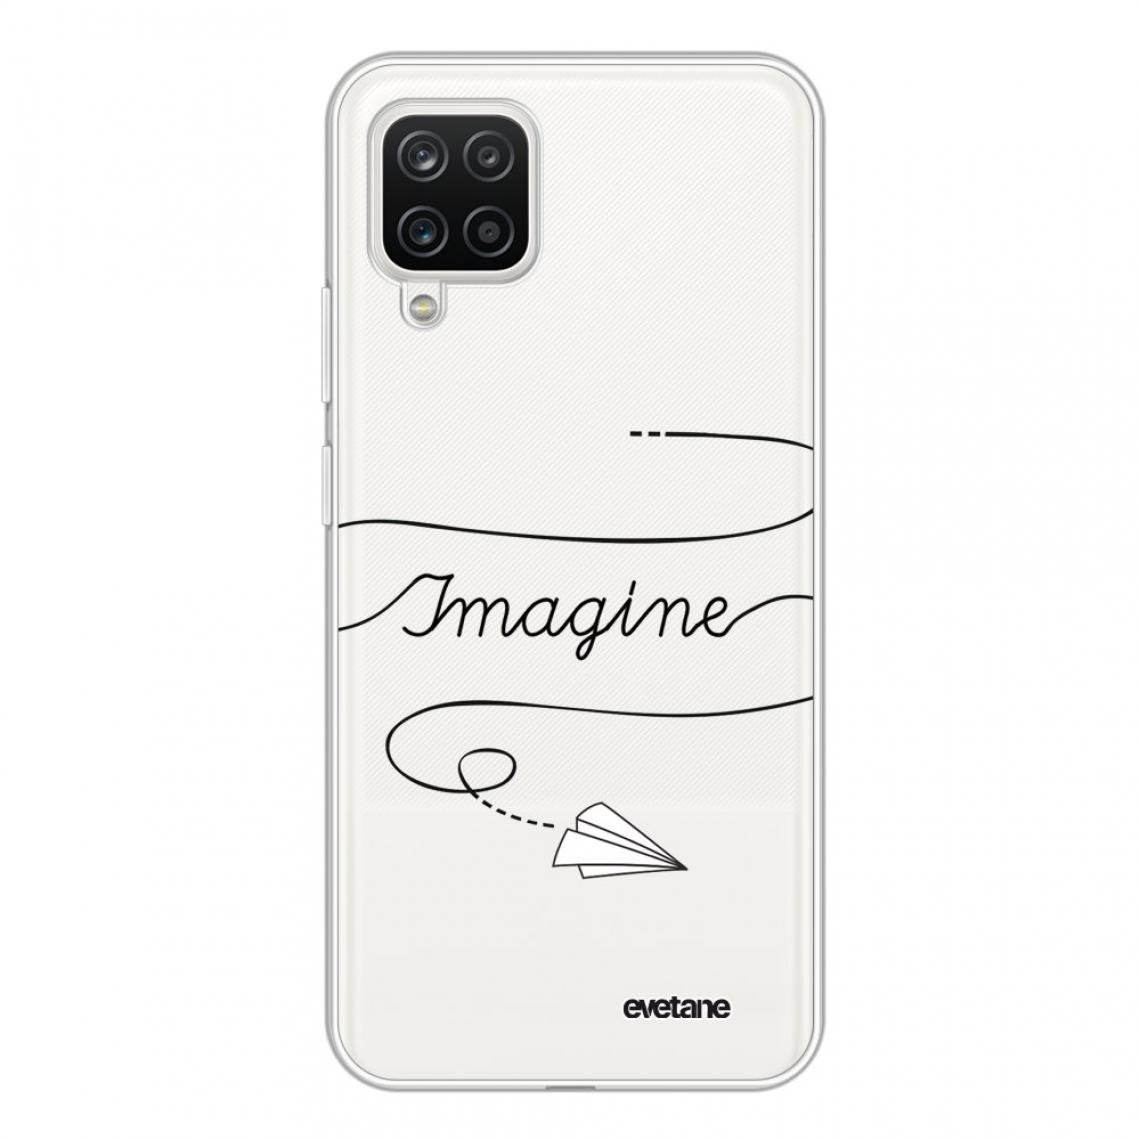 Evetane - Coque Samsung Galaxy A12 360 intégrale avant arrière transparente - Coque, étui smartphone